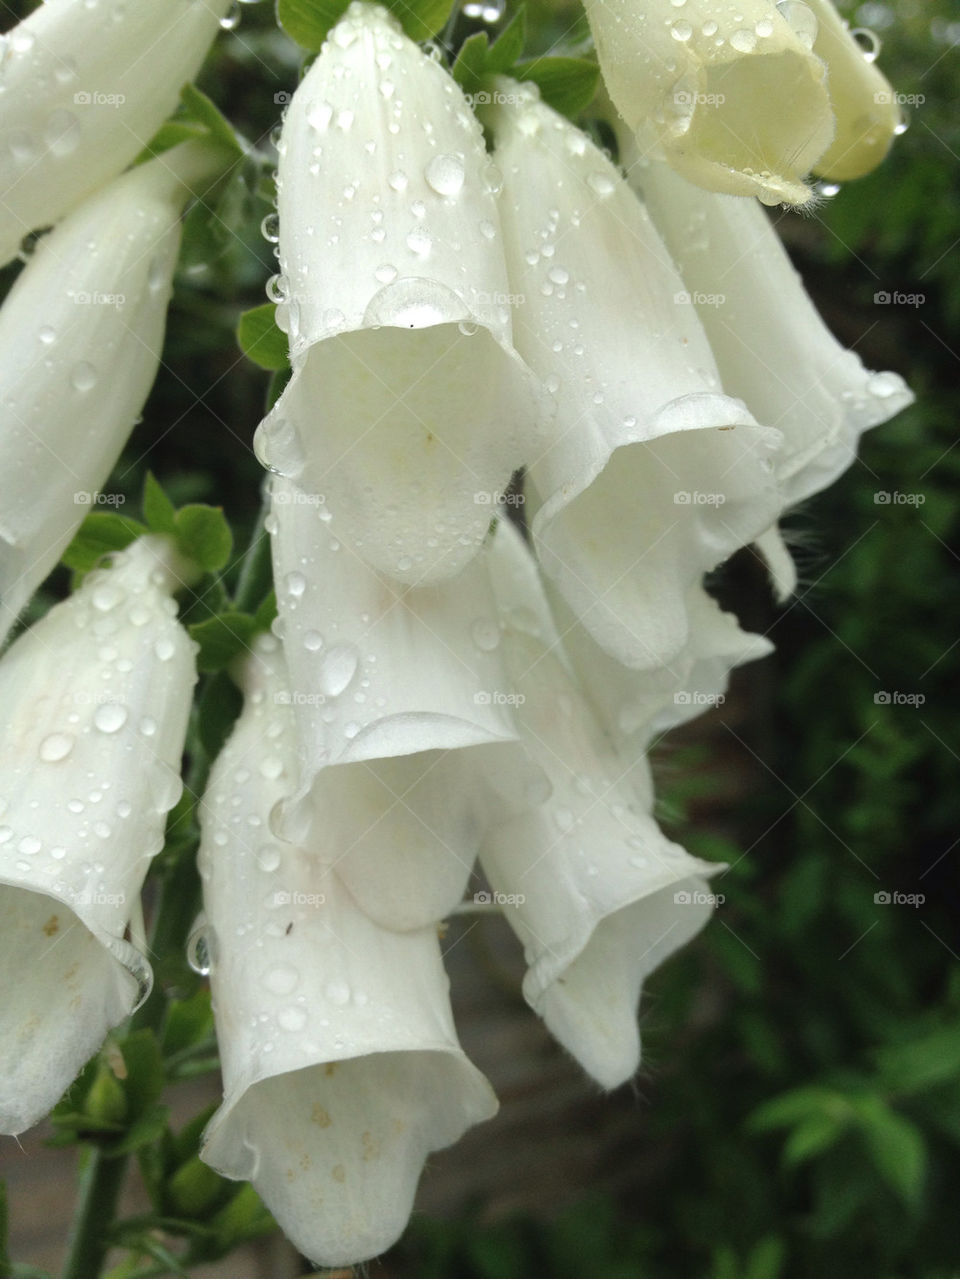 white wet droplets foxglove by gsplan